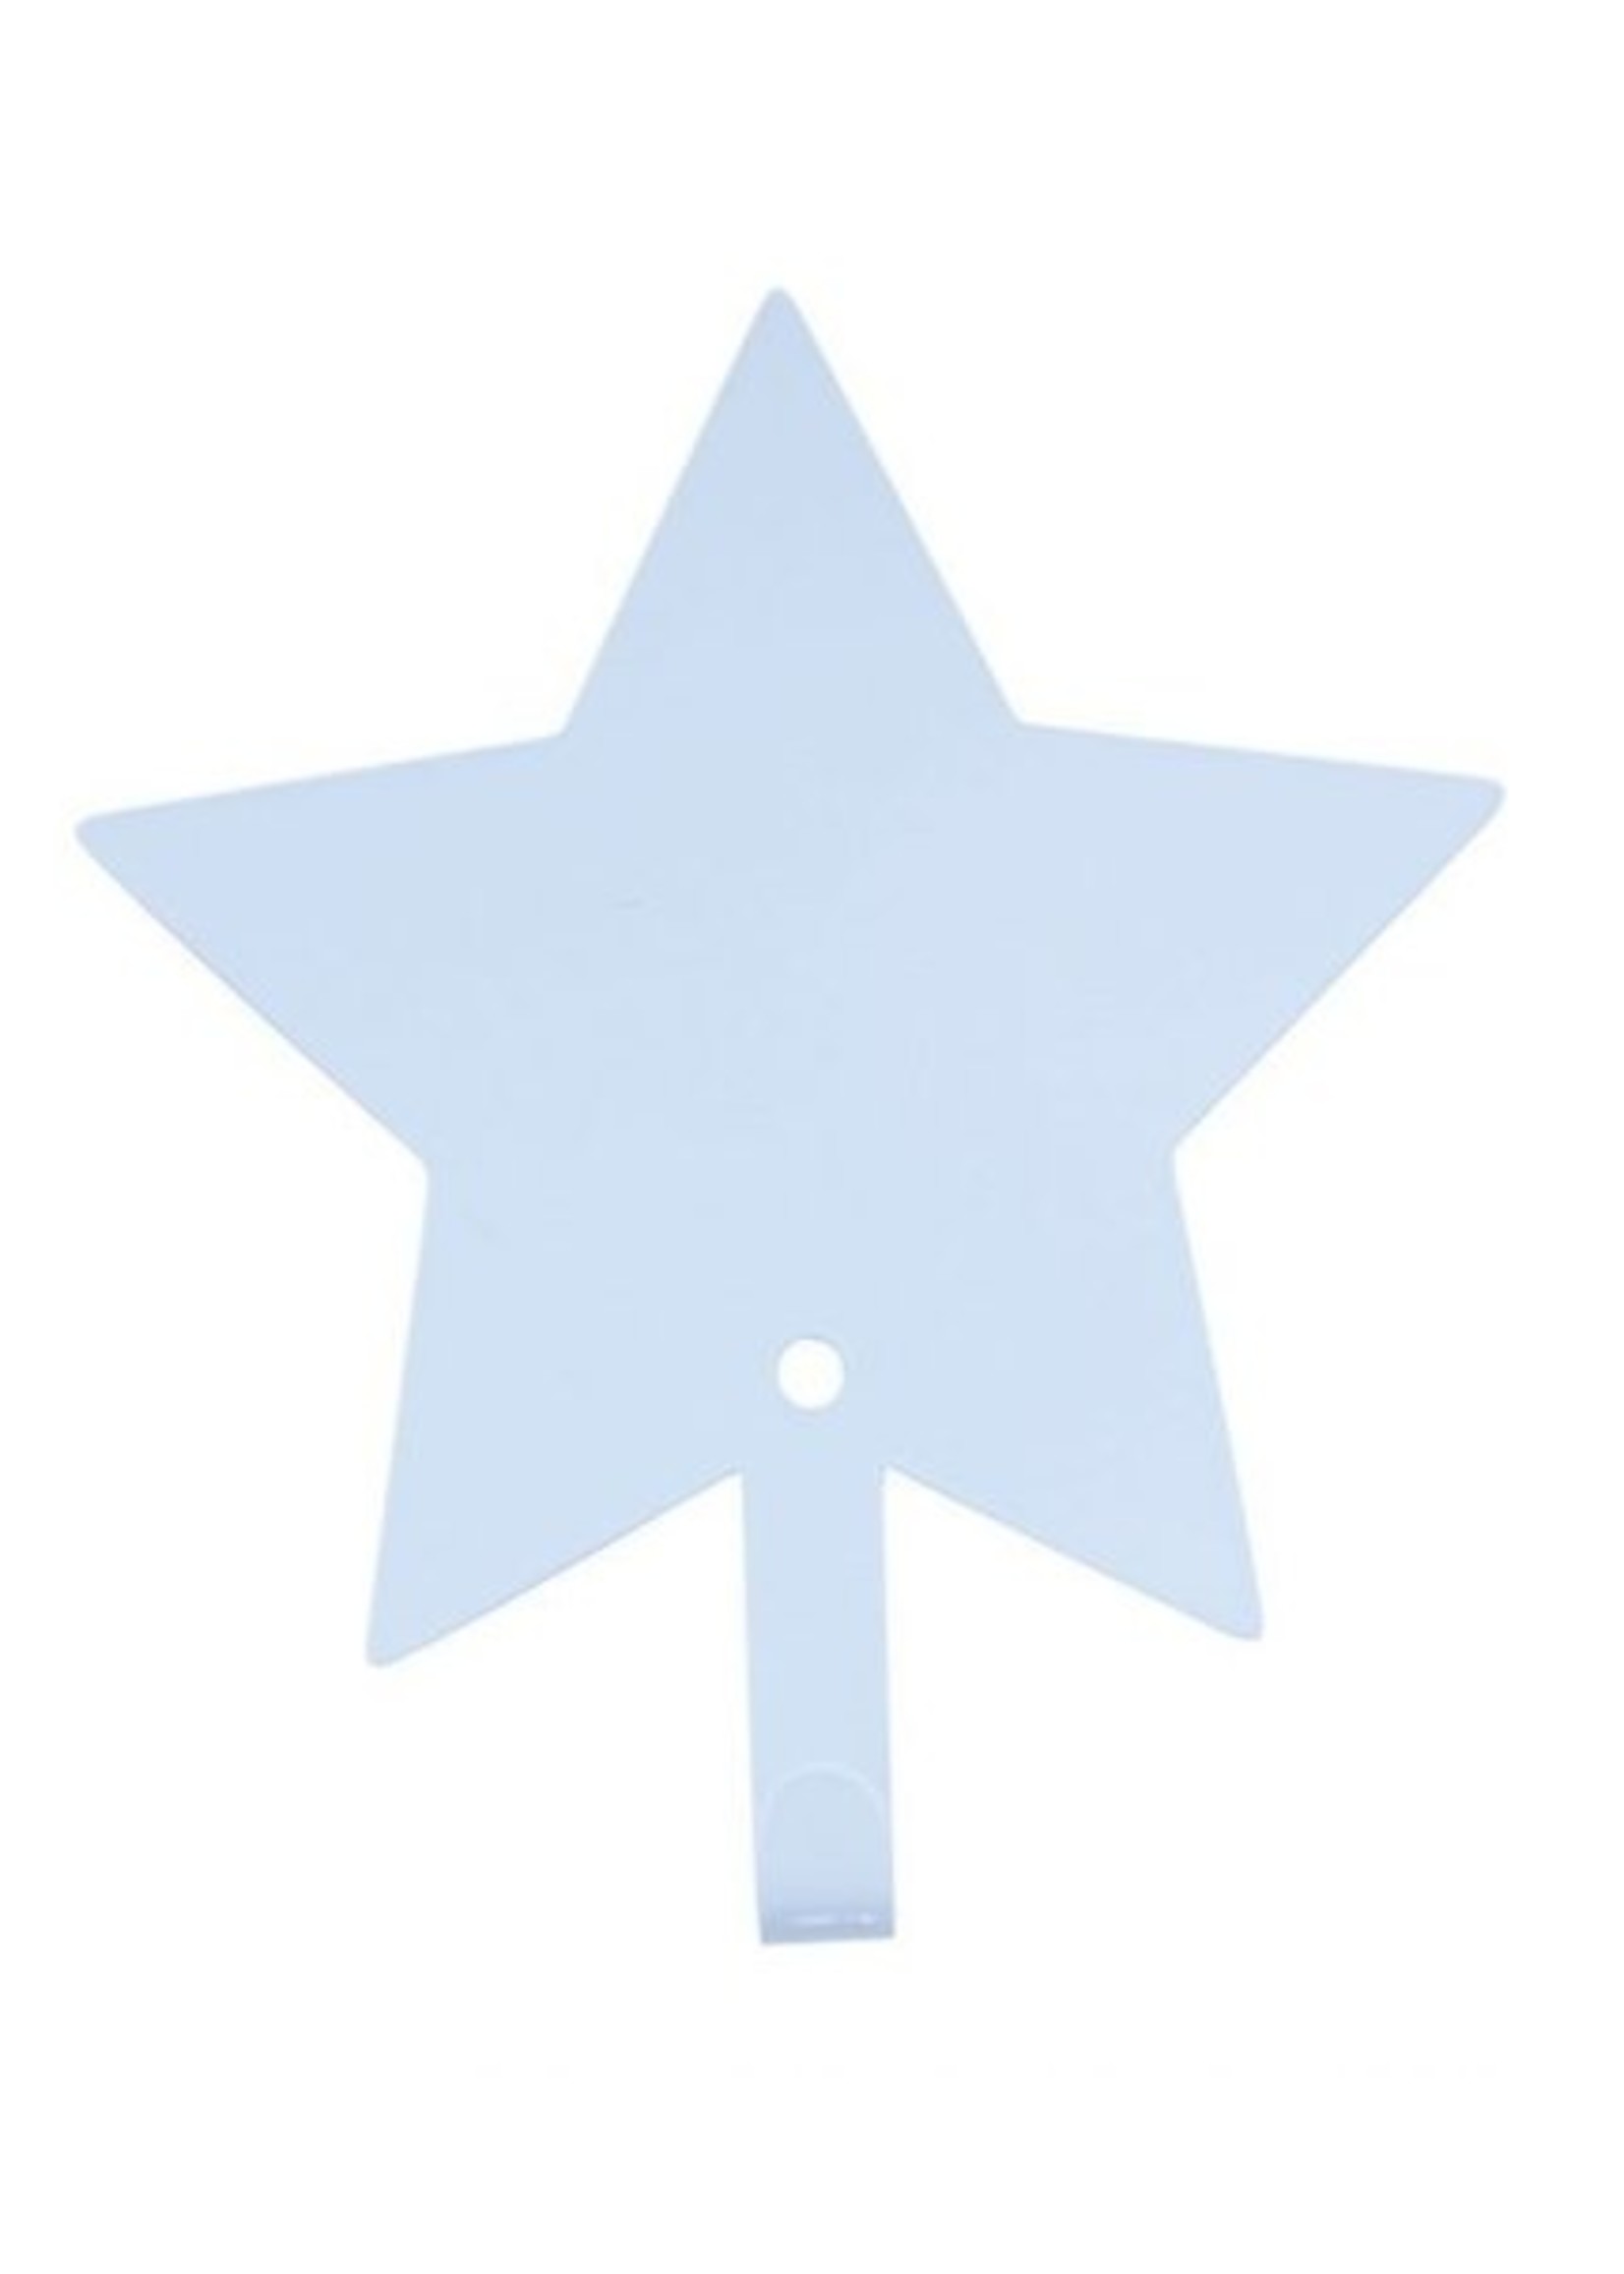 Global Affairs Coat hook - star light blue